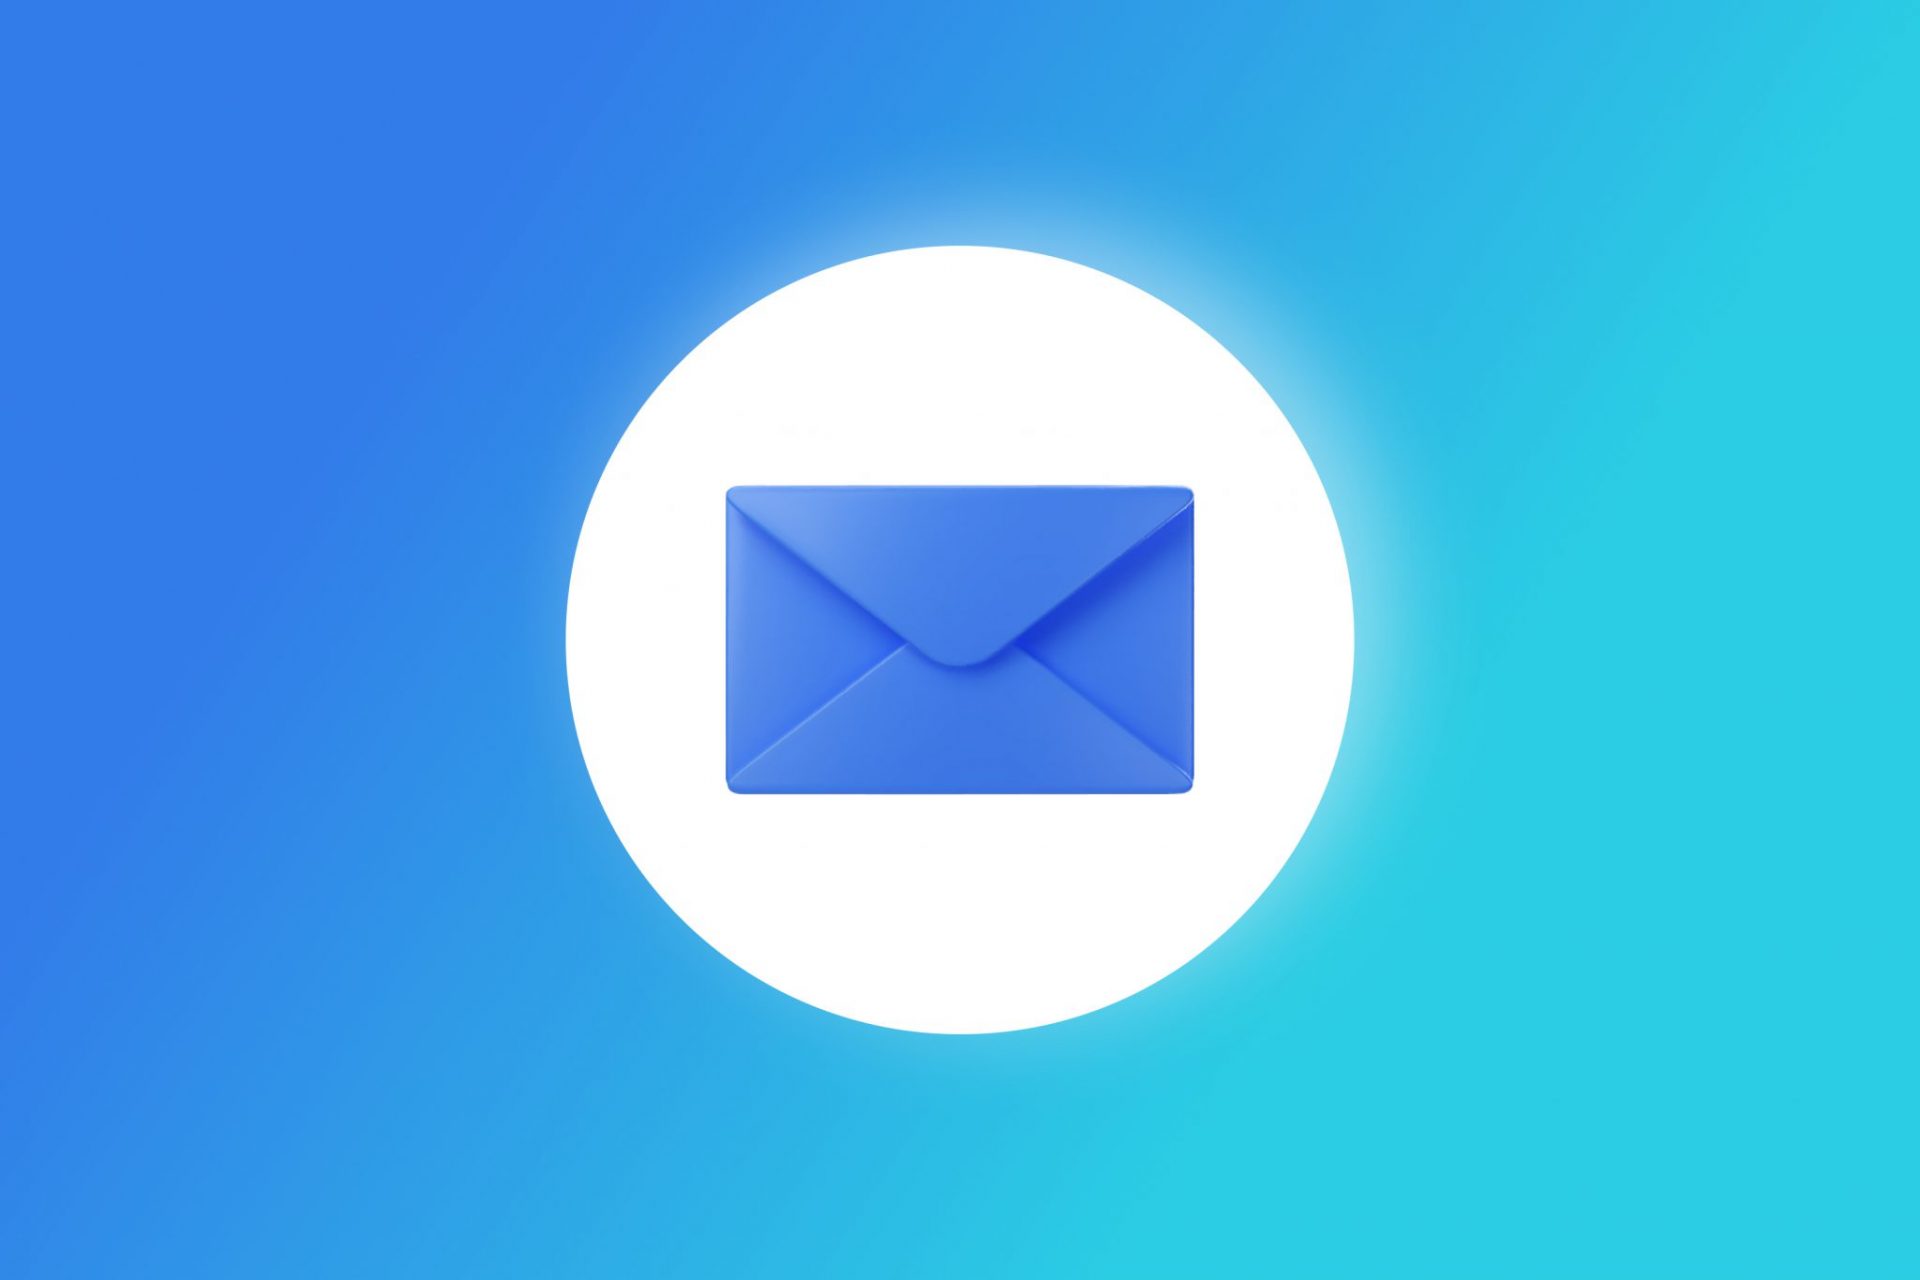 Email-header-2048x1365-1-scaled.jpg